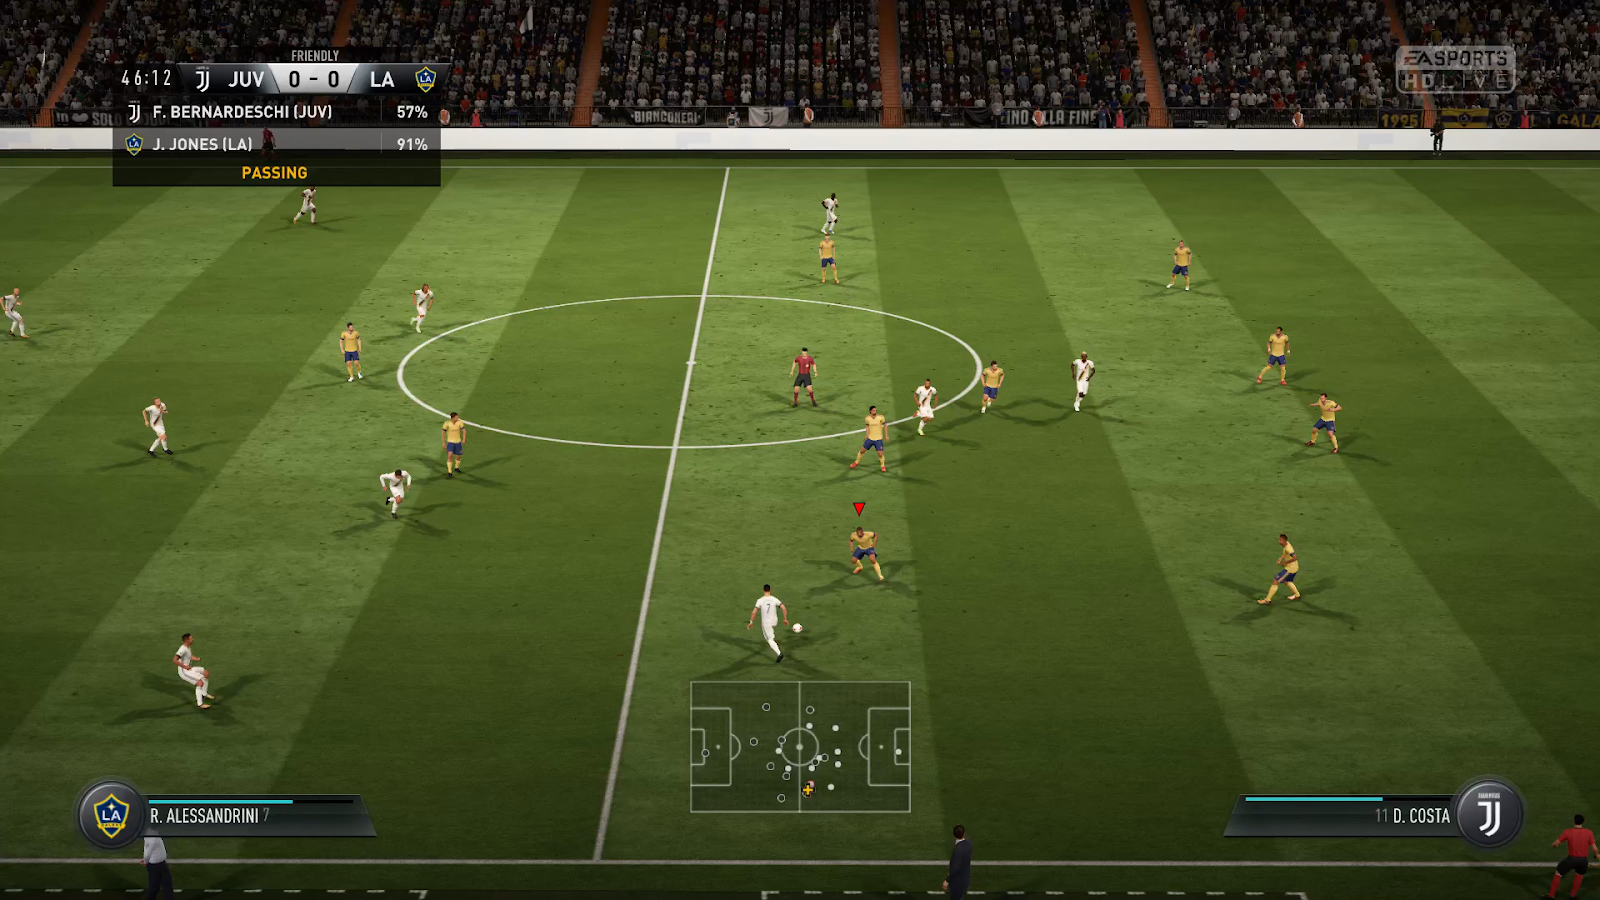 PC Game] FIFA 18 PT-BR + Narração + Update 2 + Crack - ManiGaming™